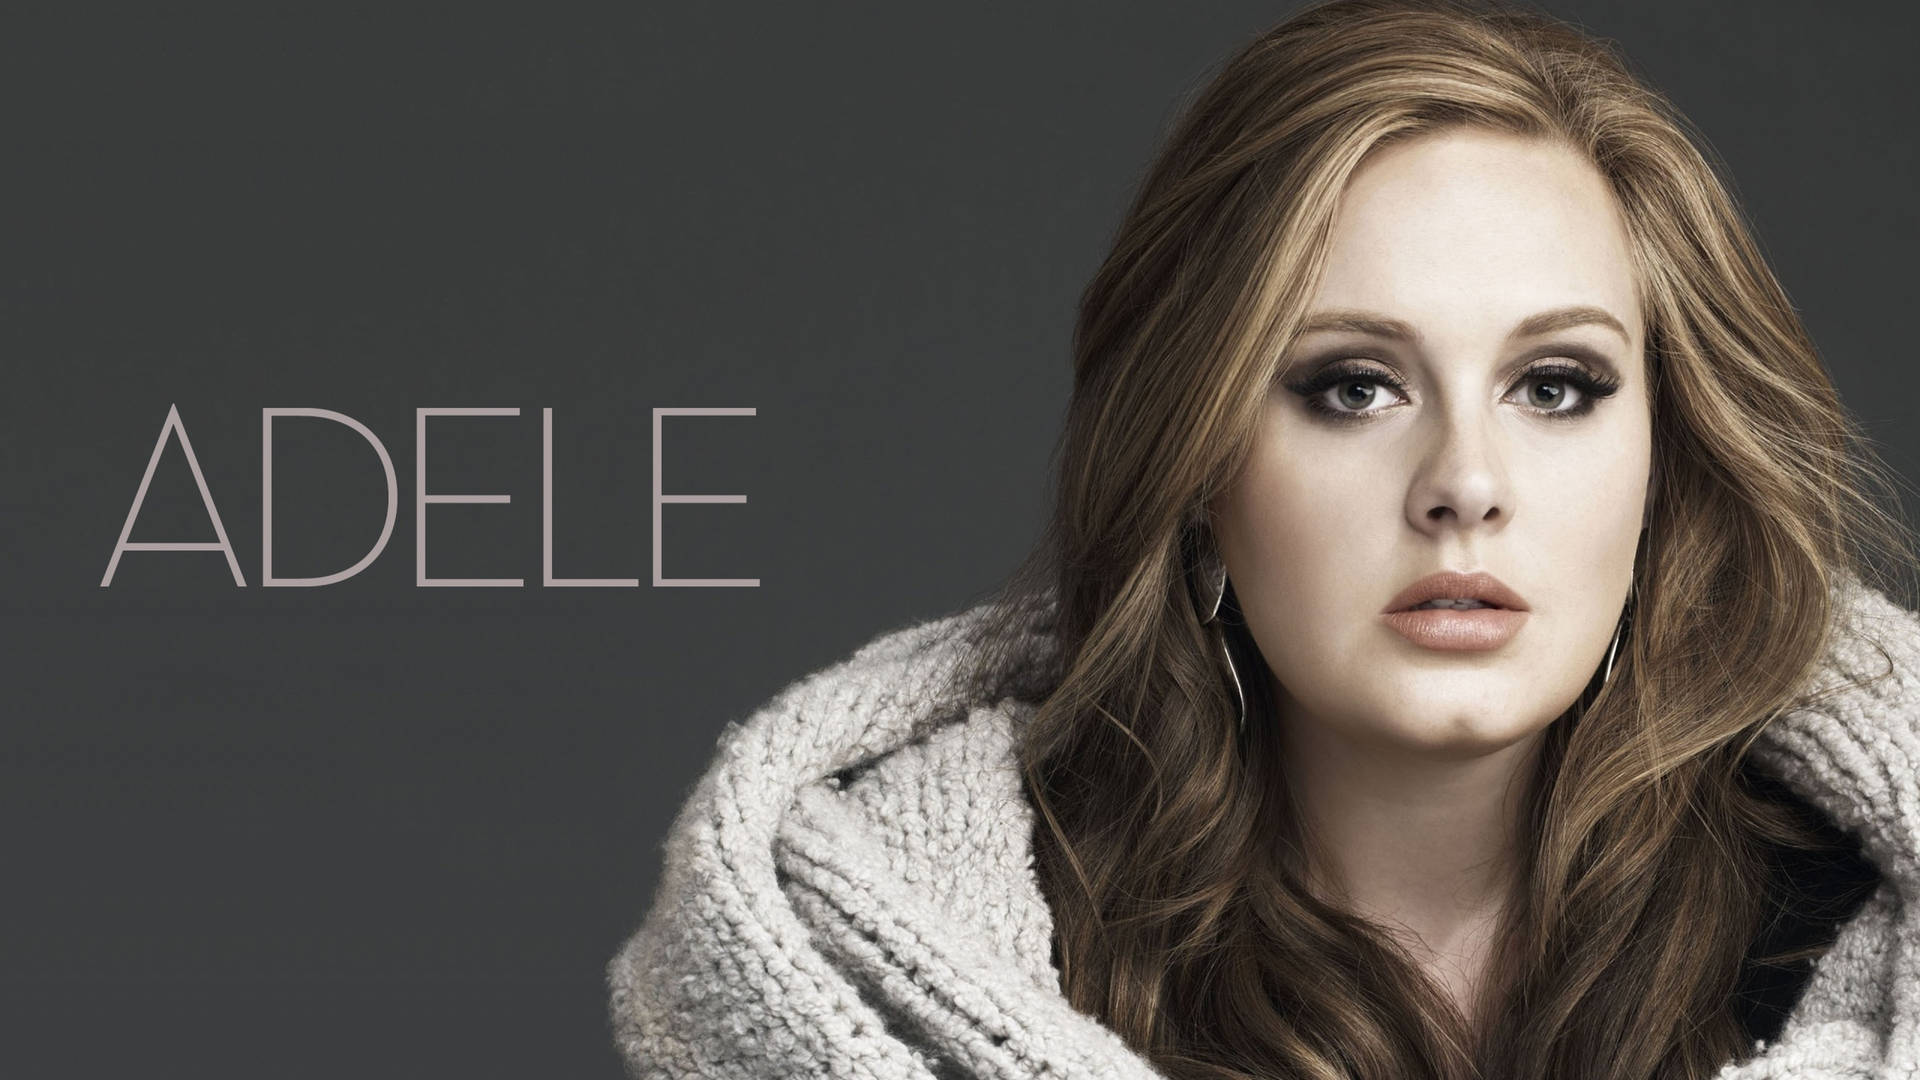 Adele 25 Album Photoshoot